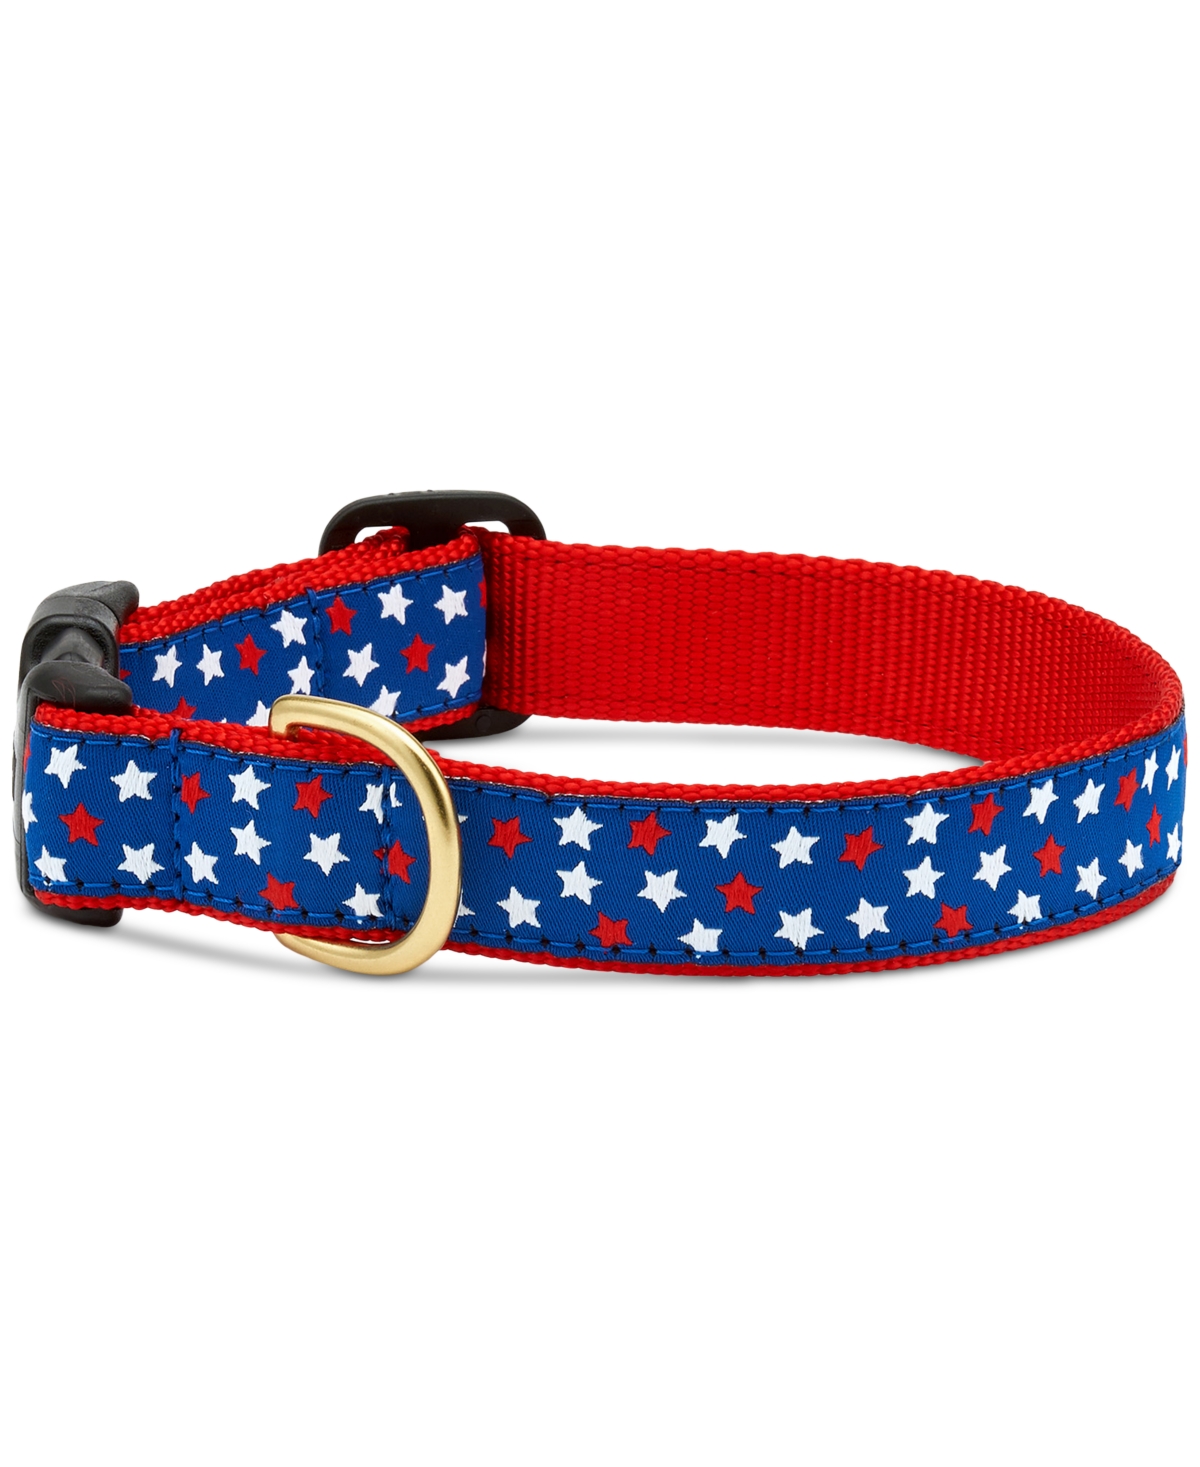 New Stars Dog Collar - Blue